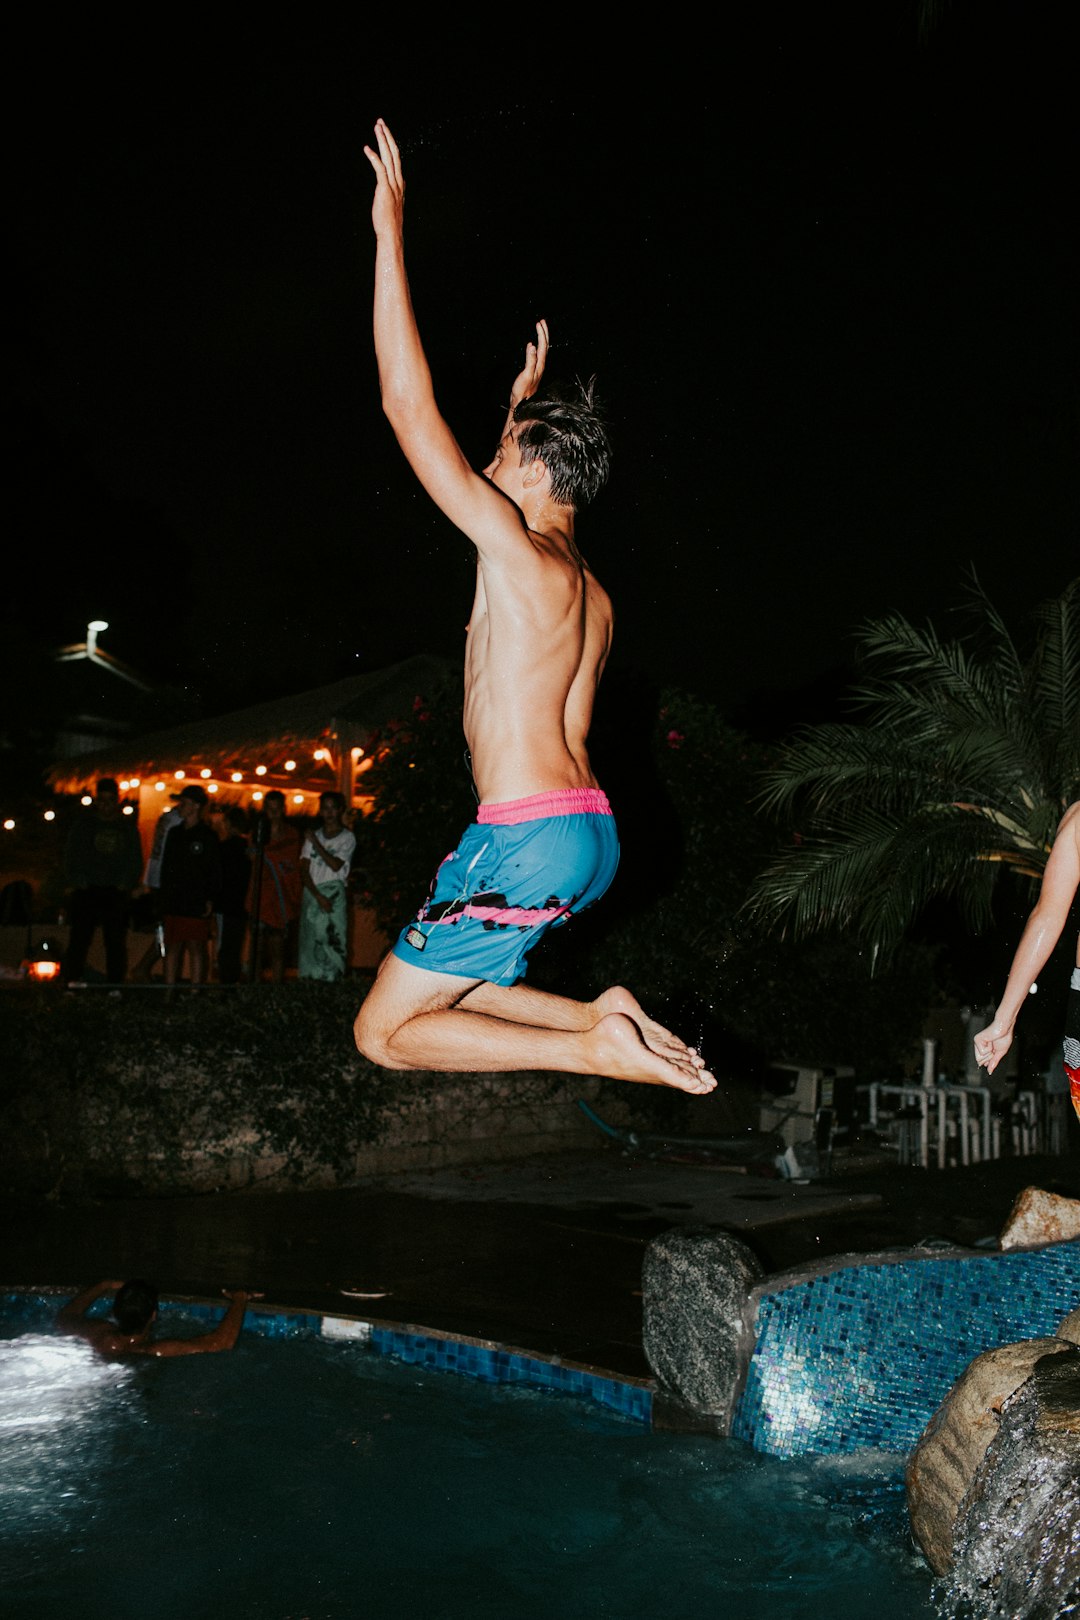 man jumping towards pool